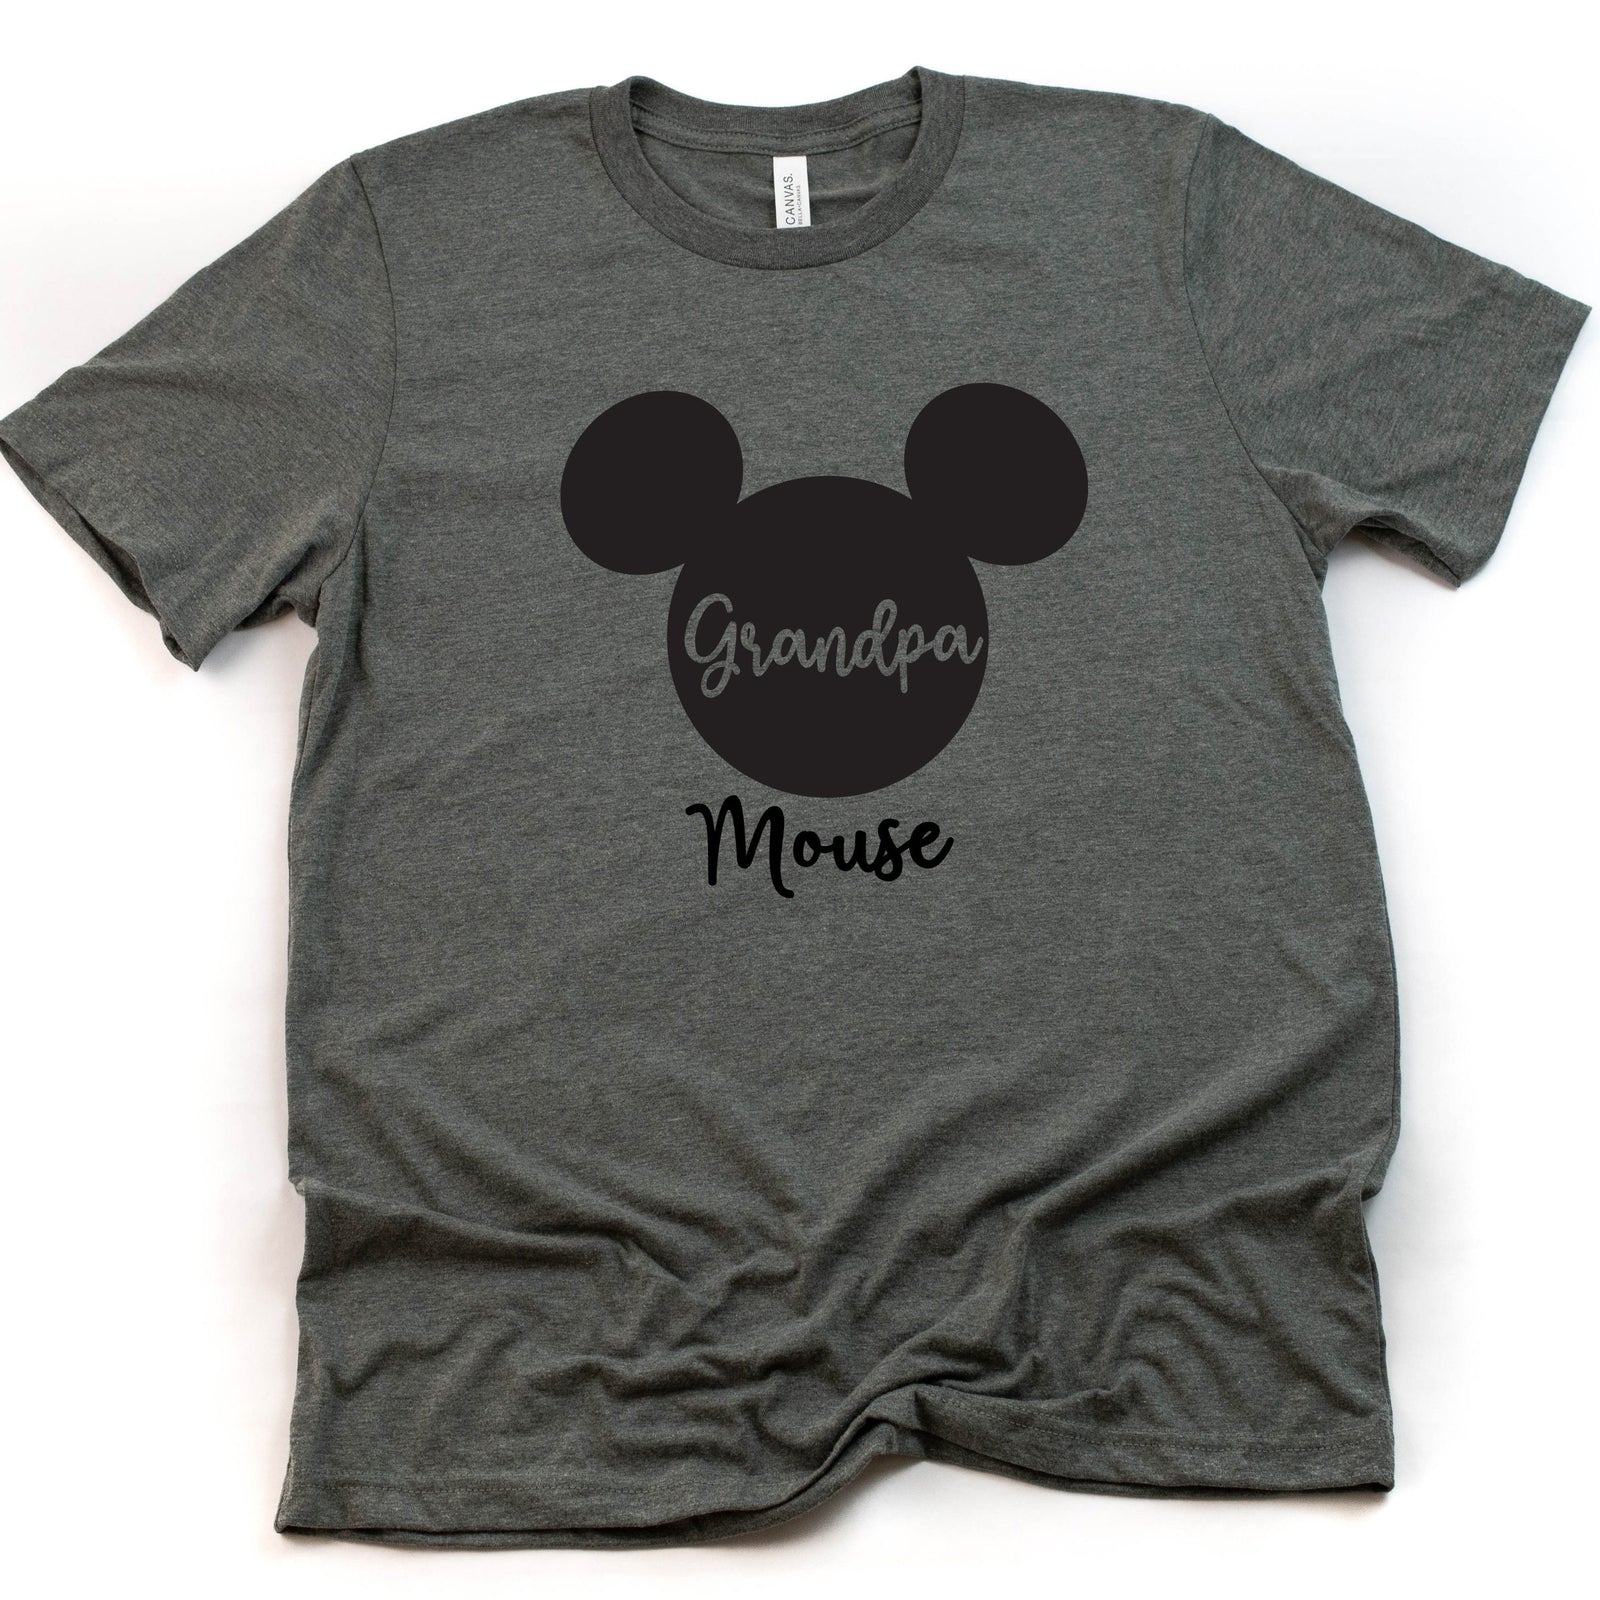 Grandpa Mickey Mouse t shirt - Disney Trip Matching Shirts -Family Matching Disney Shirts - Custom Name